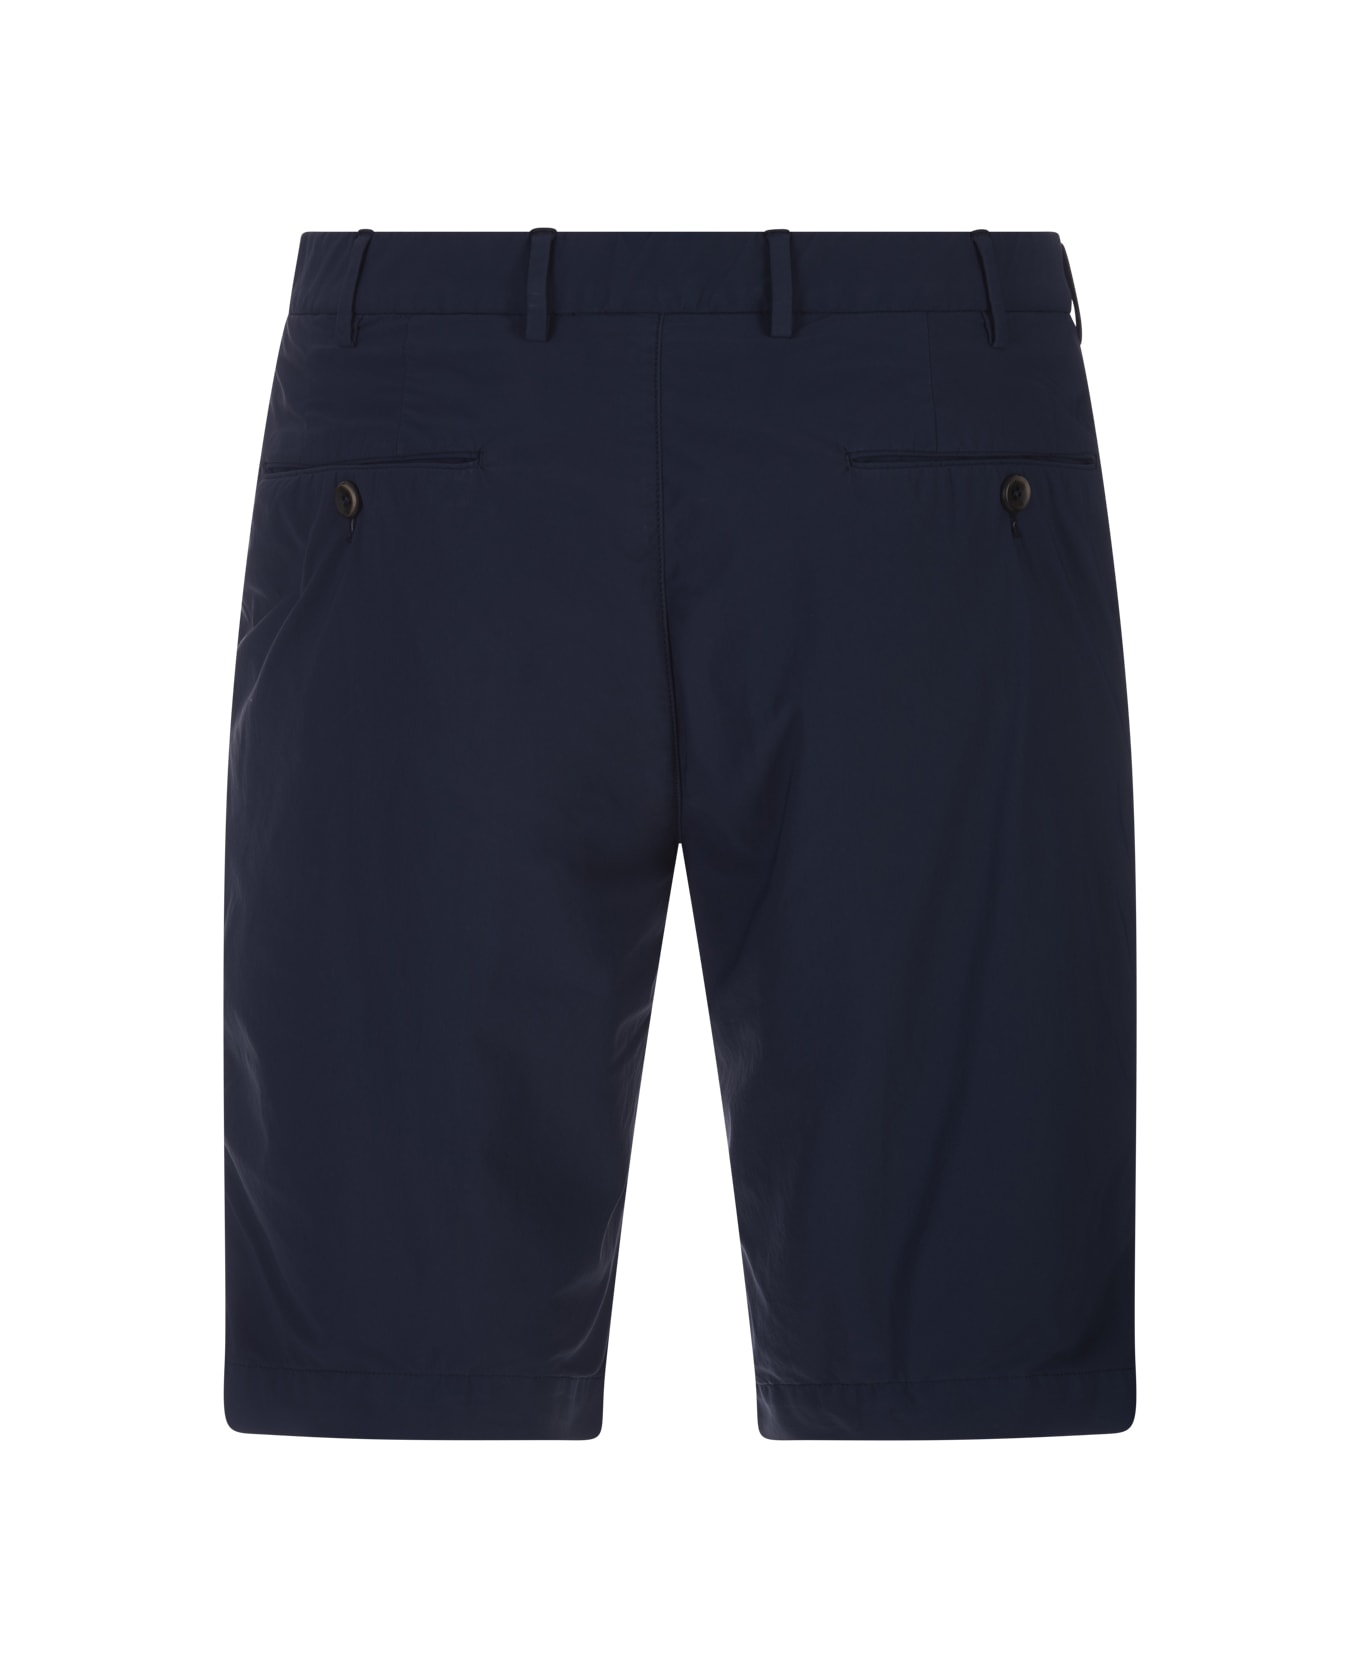 PT Bermuda Dark Blue Stretch Cotton Shorts - Blue ショートパンツ